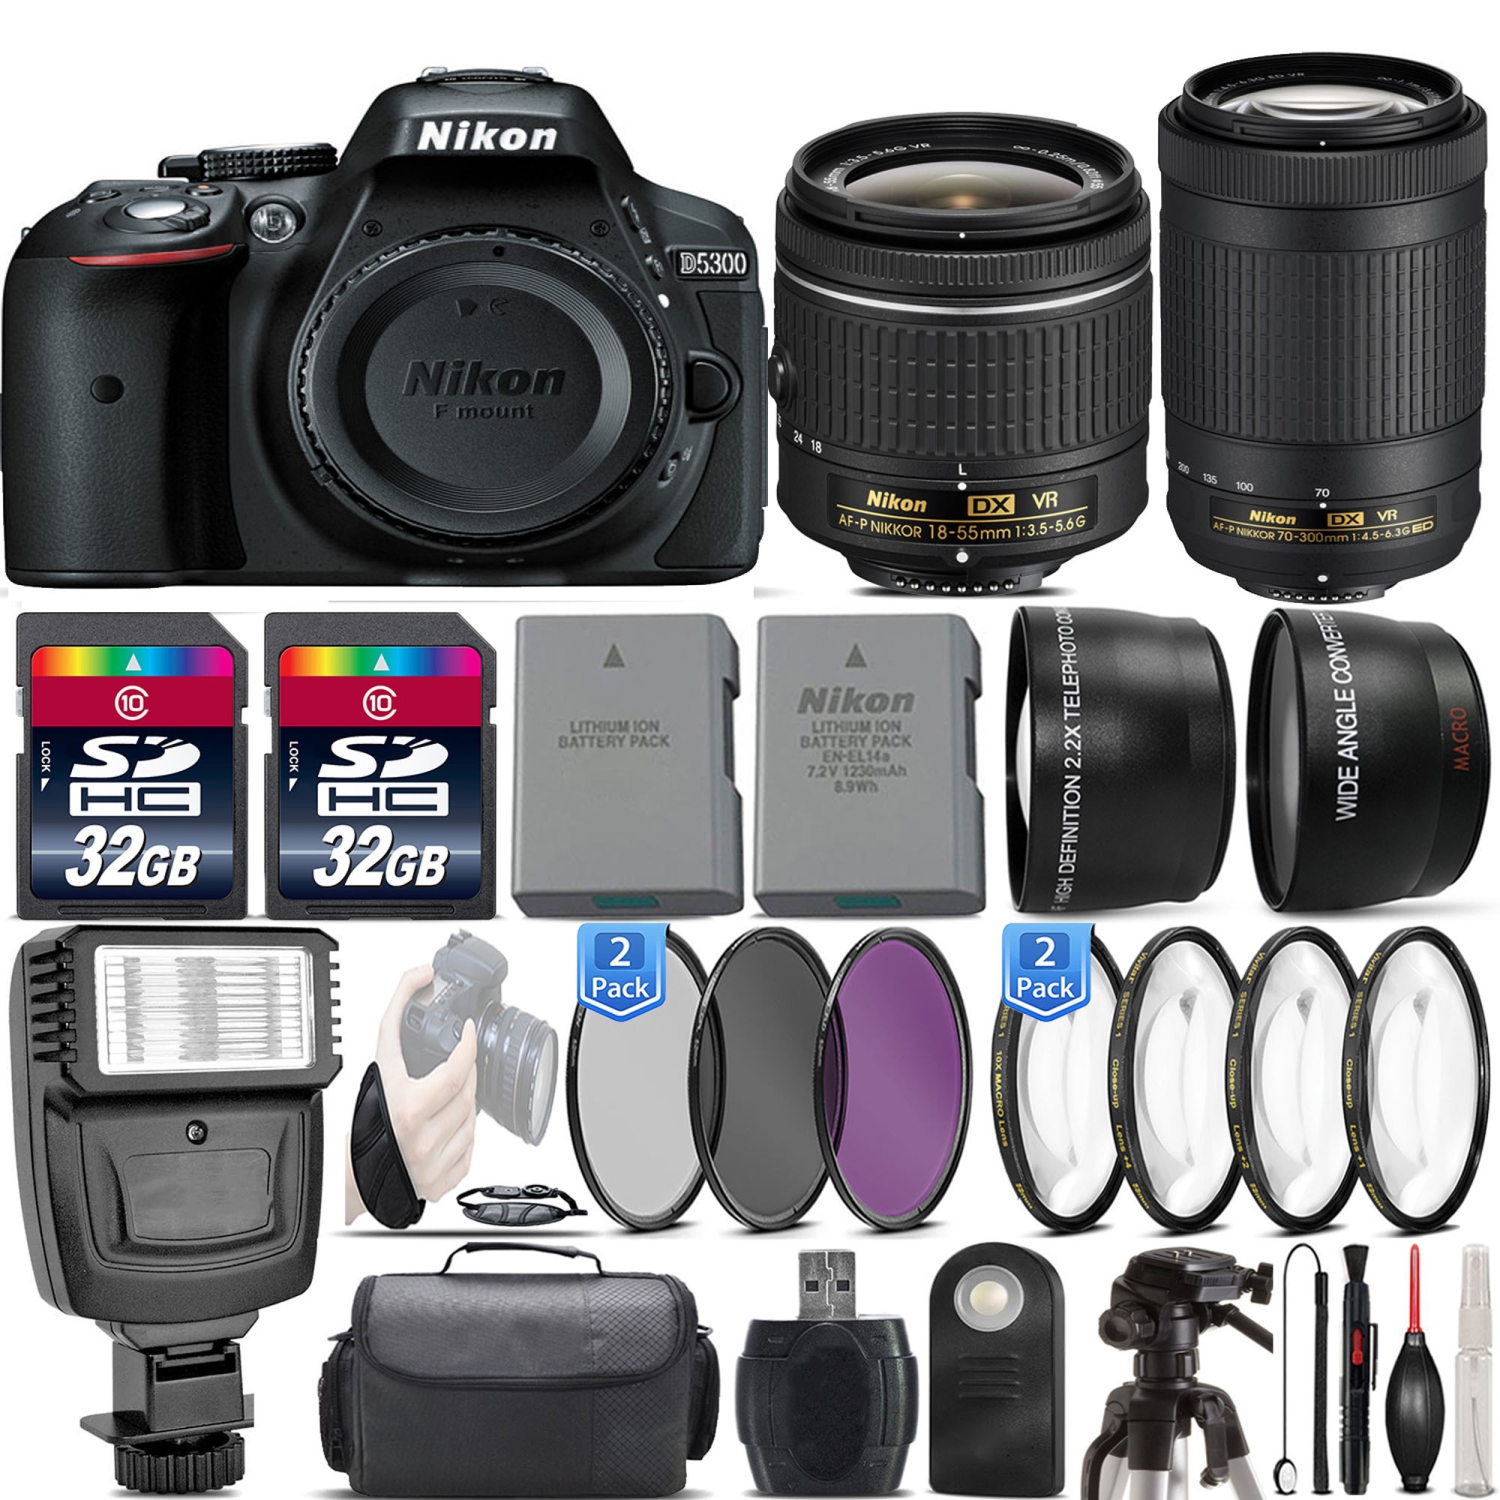 Nikon D5300 24.2MP DSLR Camera||18-55mm VR Lens||70-300mm VR -64GB KIT - US Version w/ Seller Warranty